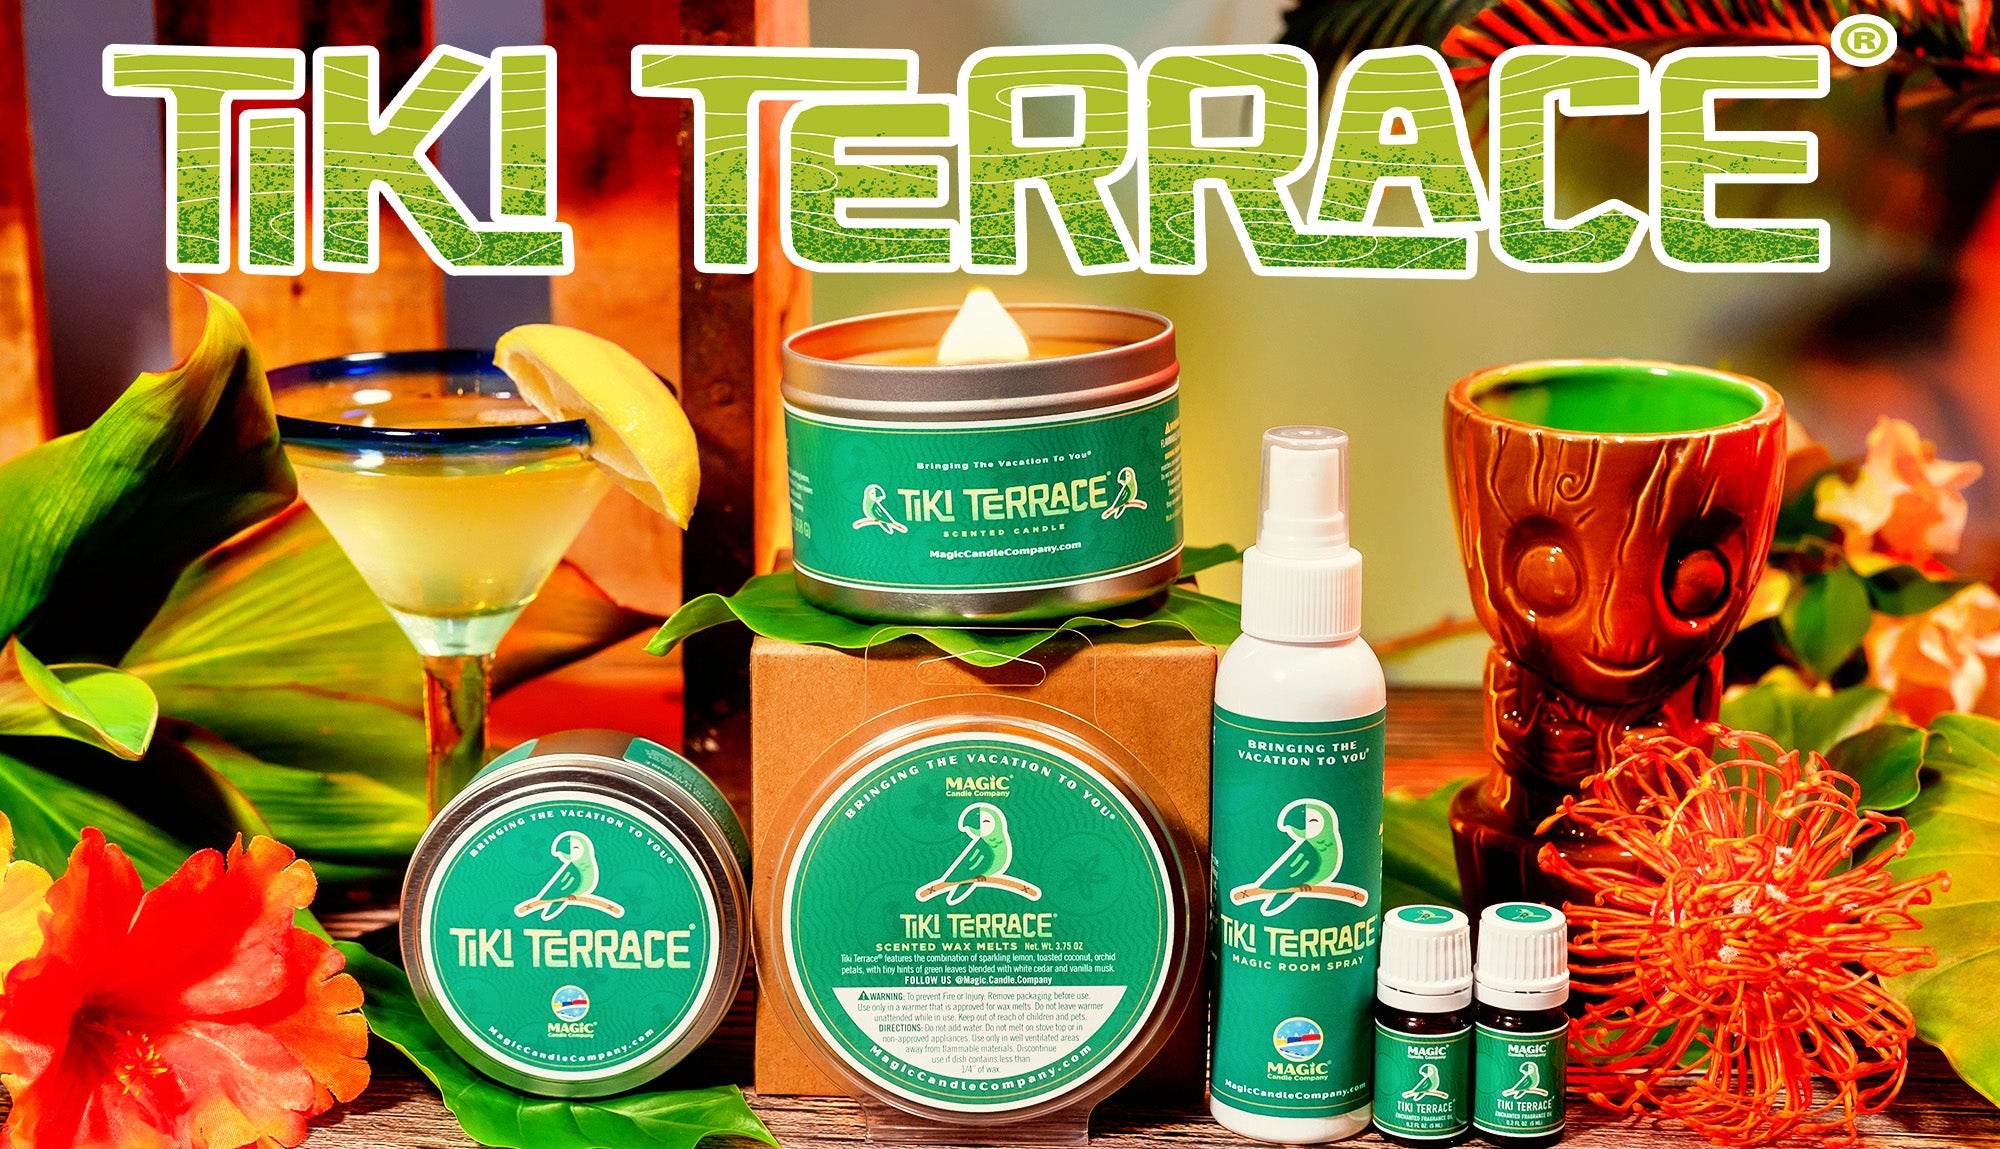 Tiki Terrace fragrance